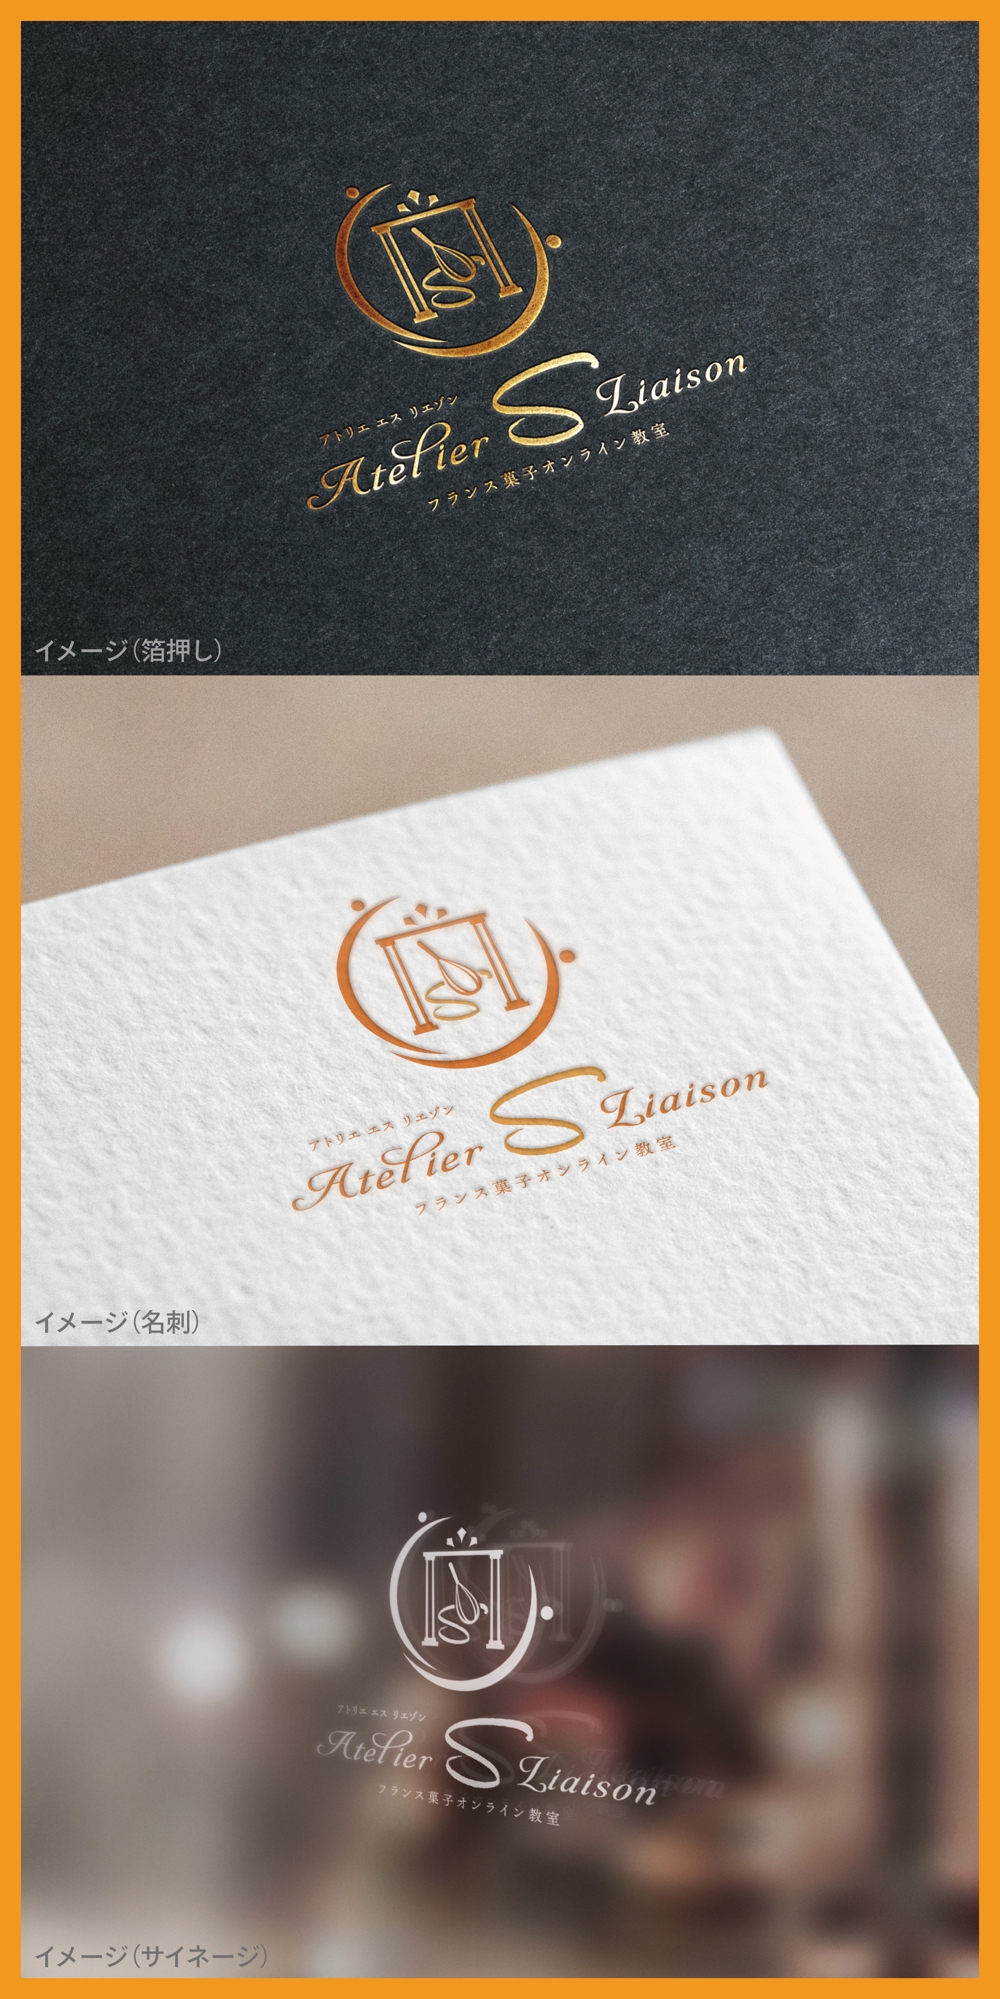 Atelier S Liaison_logo01_01.jpg